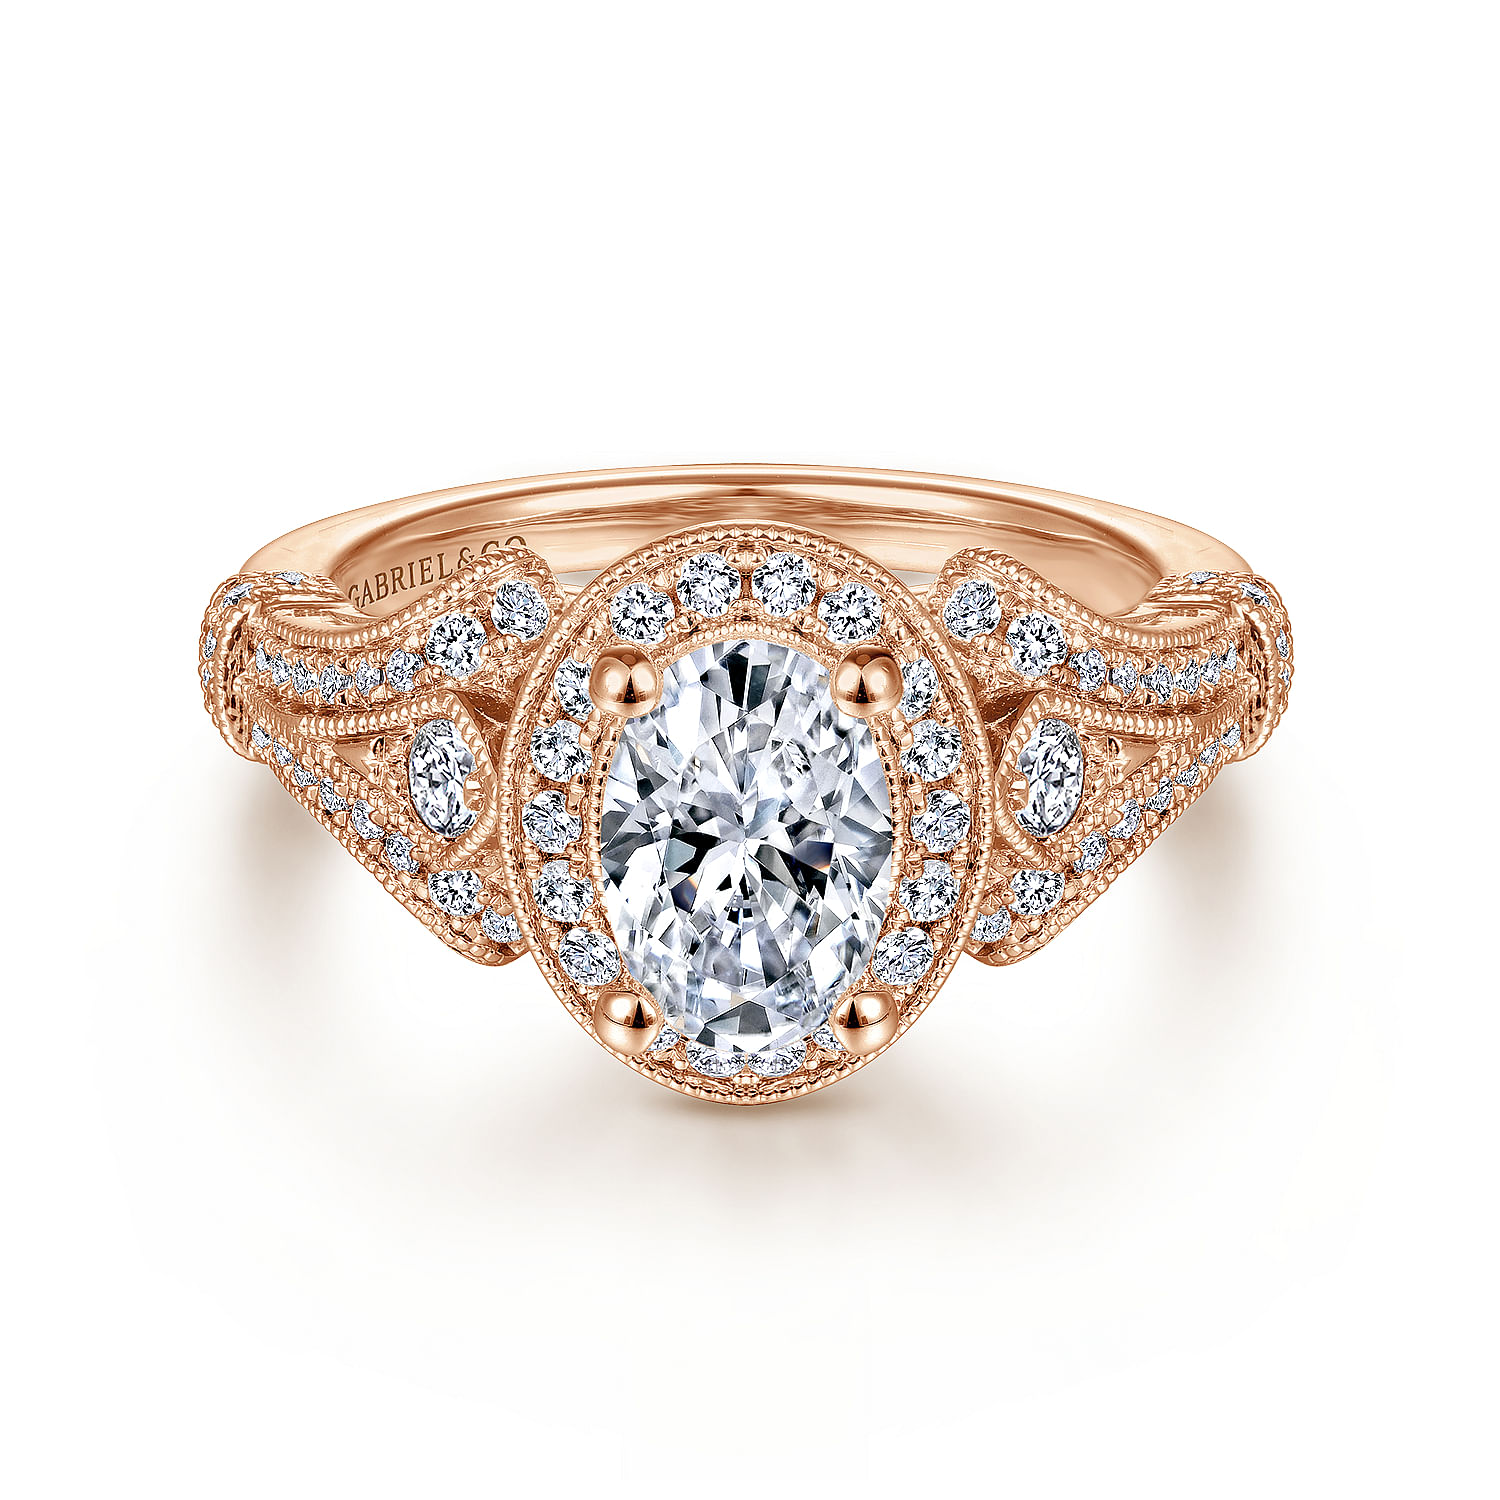 Delilah - Vintage Inspired 14K Rose Gold Oval Halo Diamond Engagement Ring